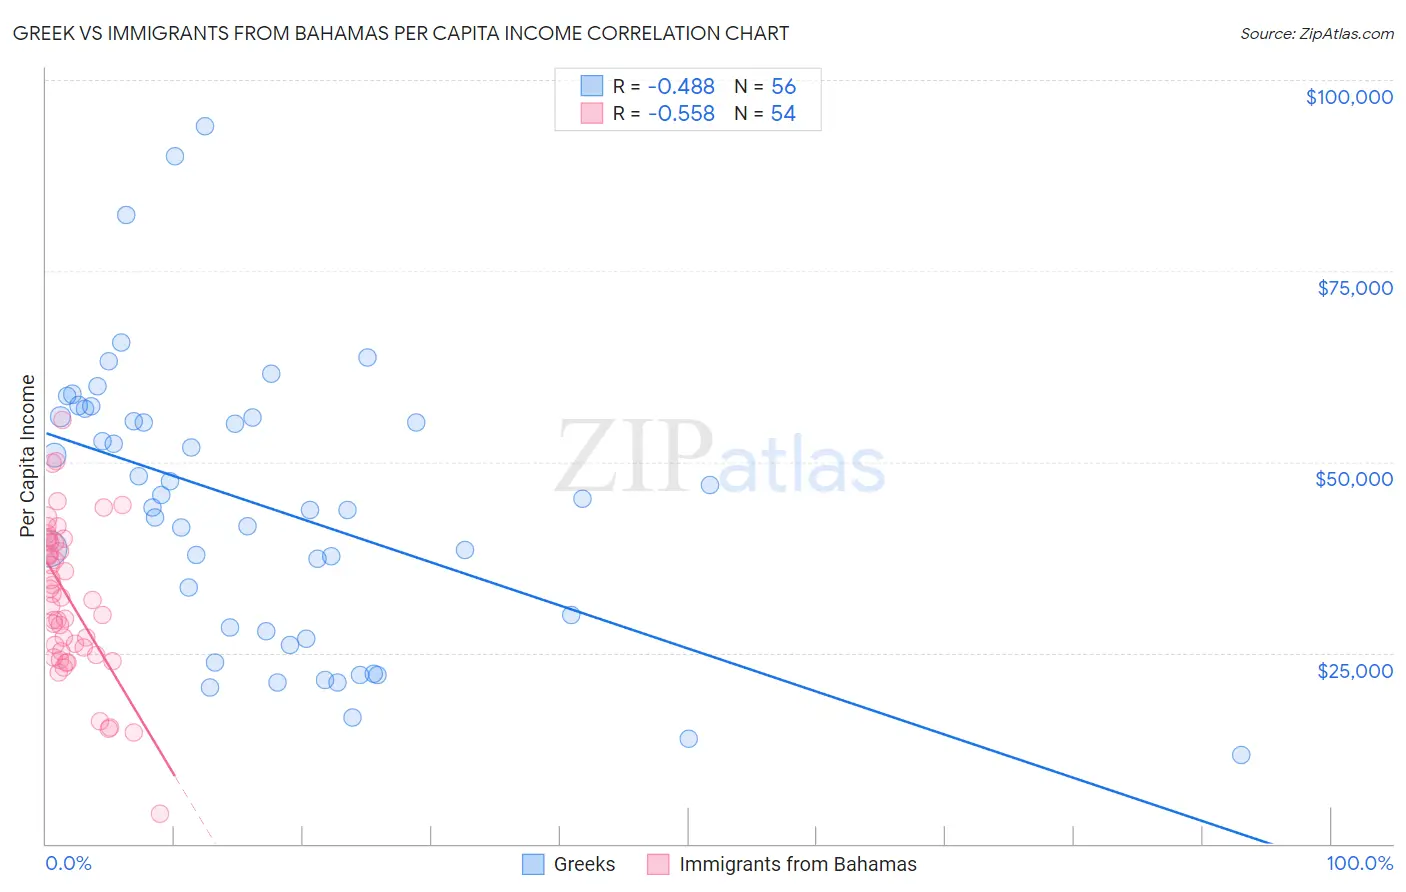 Greek vs Immigrants from Bahamas Per Capita Income